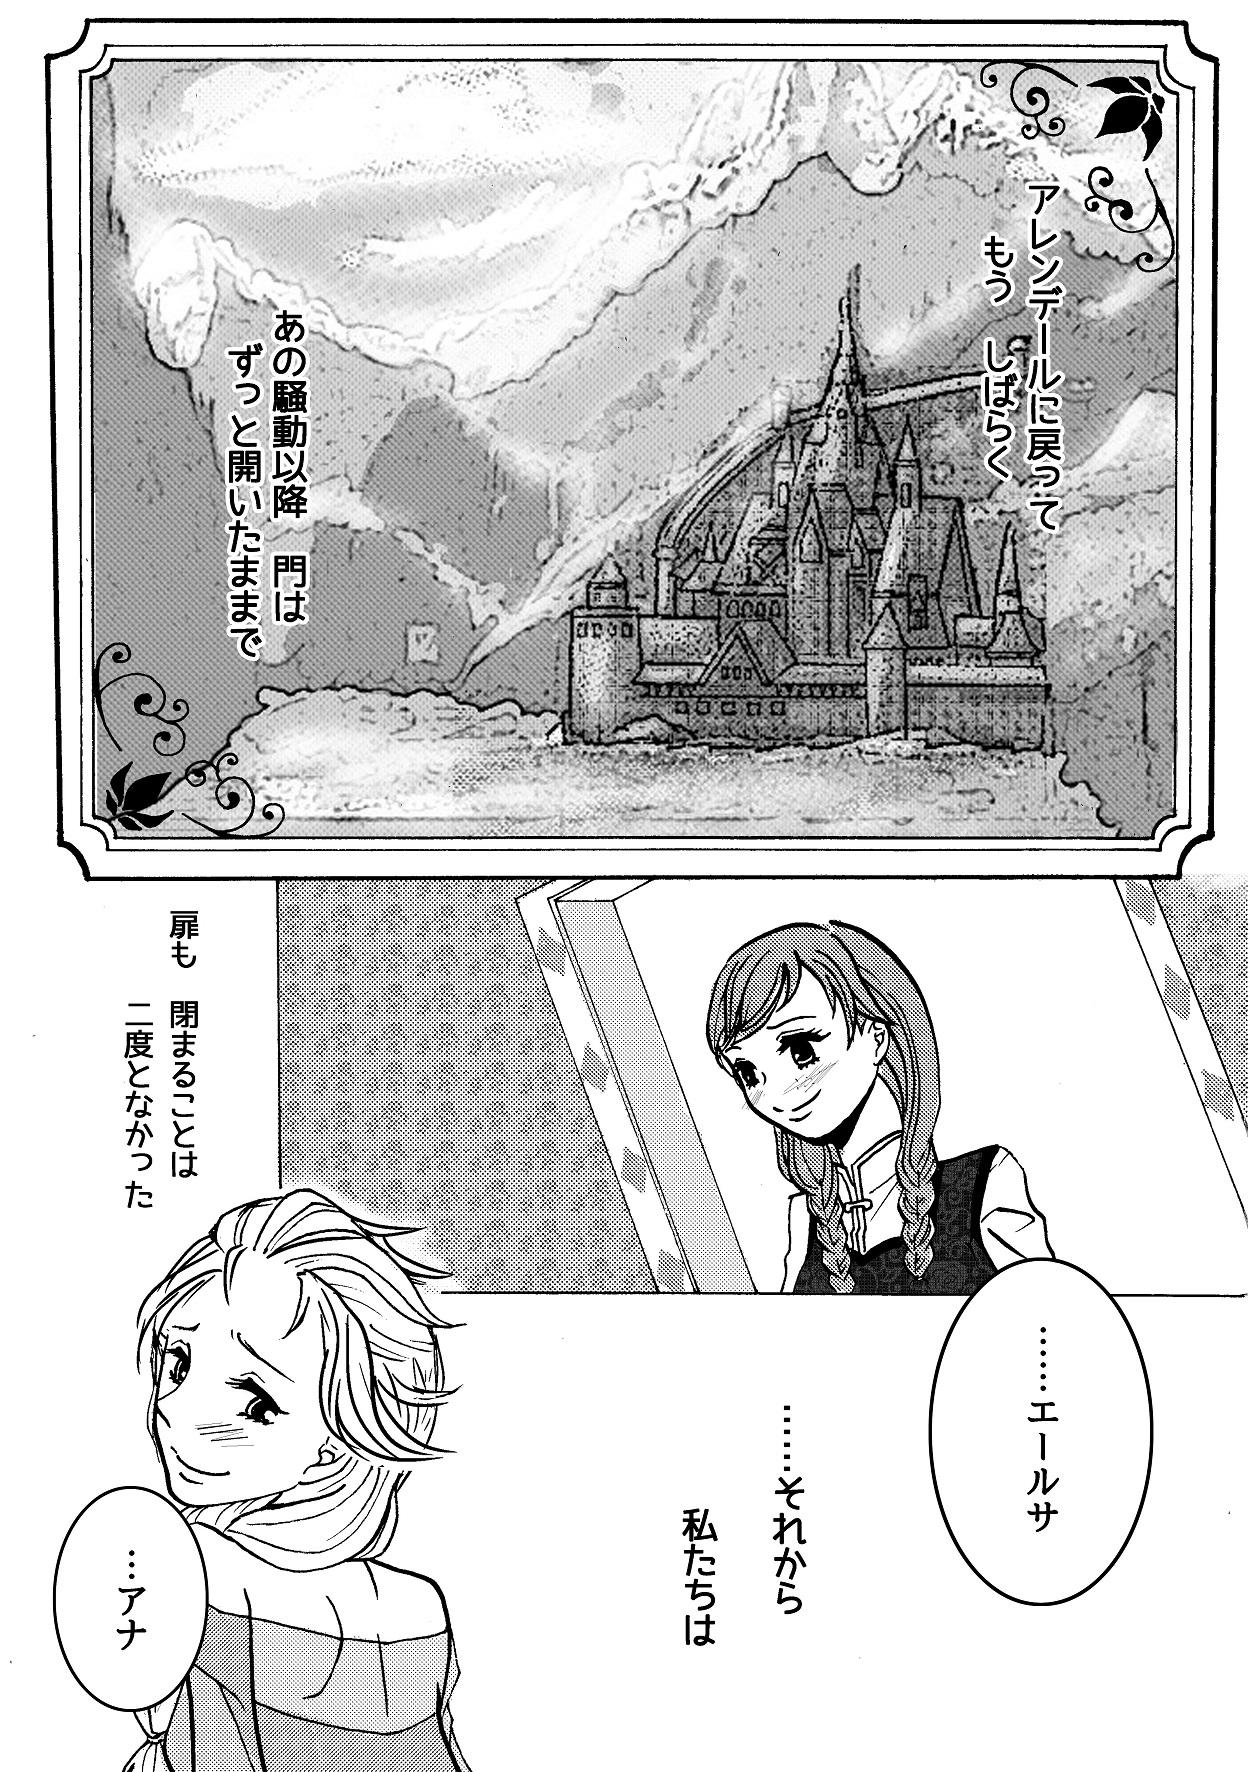 Gagging Shiawase na Yukidaruma - A happy snowman - Frozen Arabe - Page 2